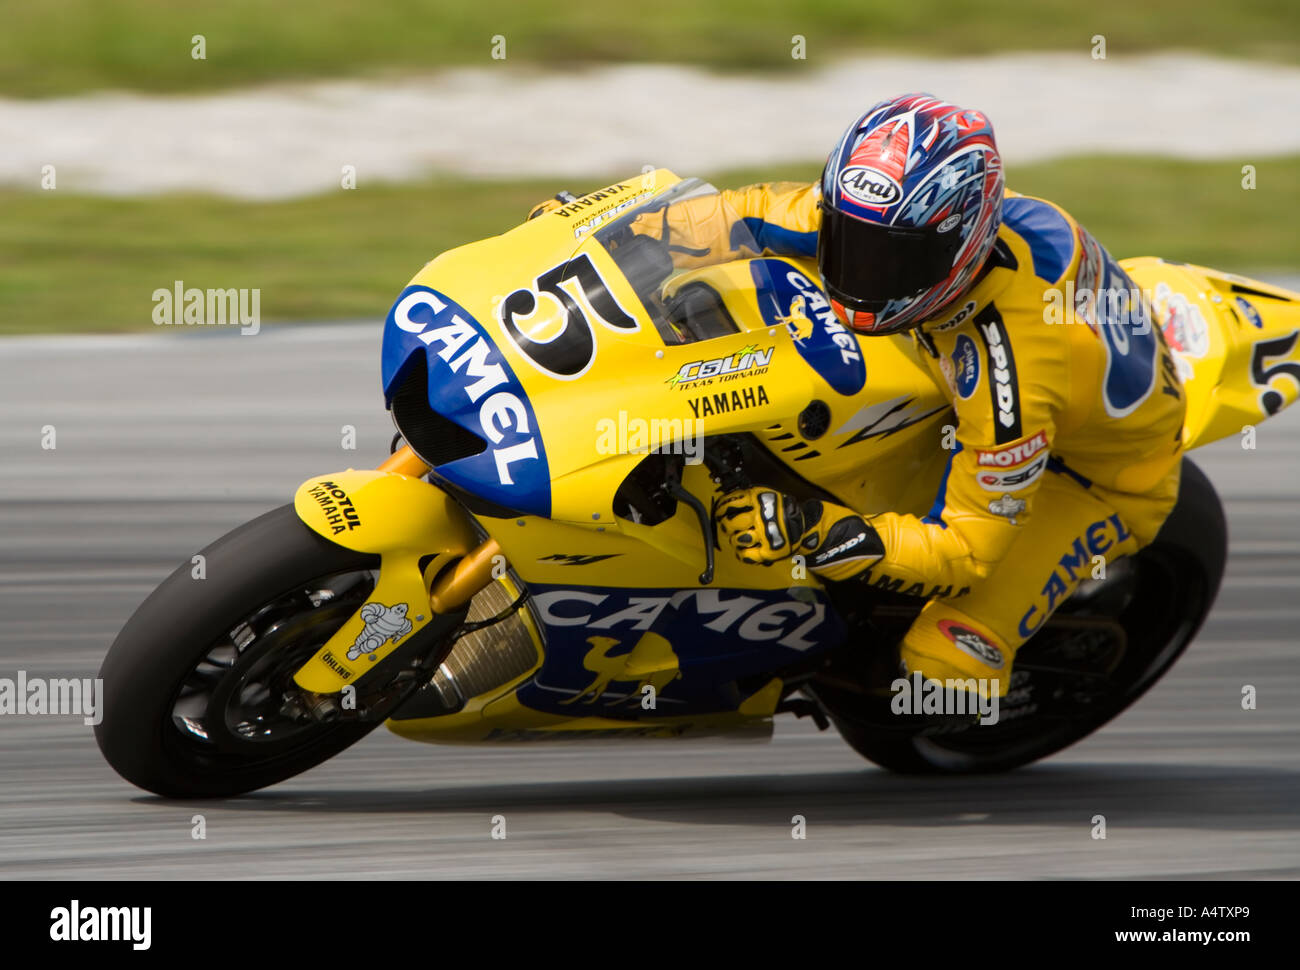 MotoGP rider Colin Edwards racing at the Sepang International Circuit, Malaysia Stock Photo